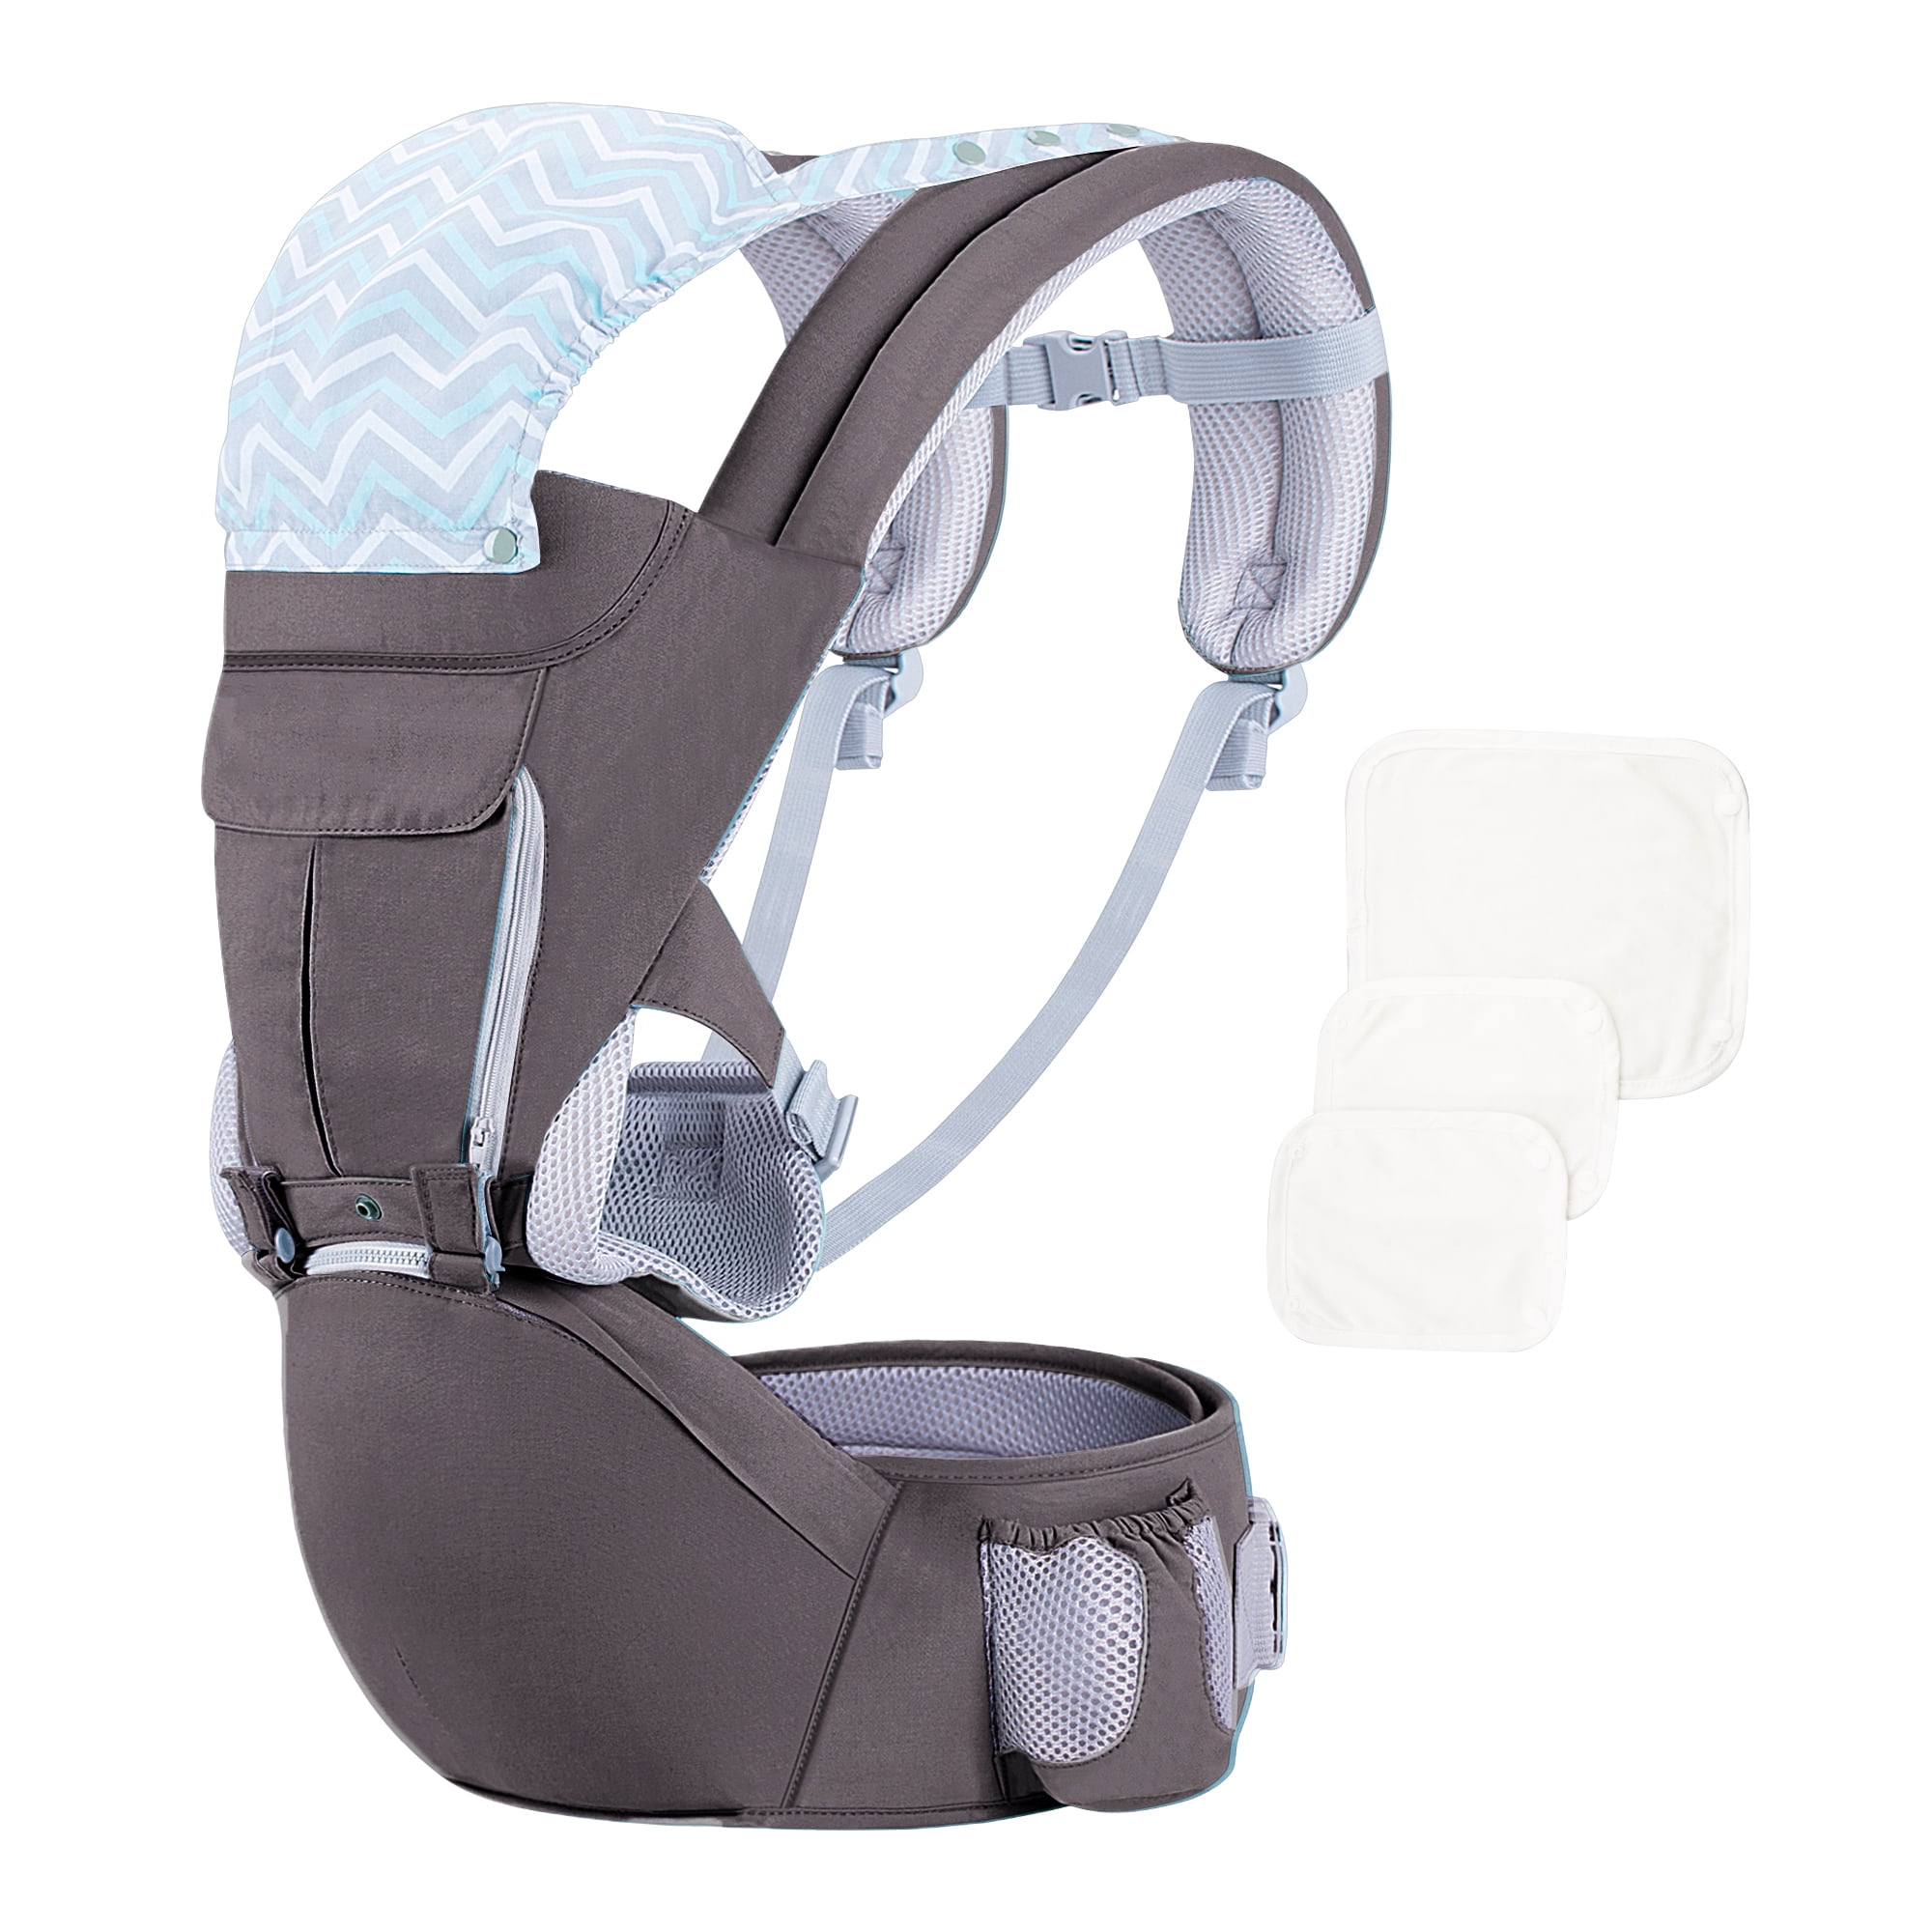 Lictin Baby Carrier Hip Seat LGZ2